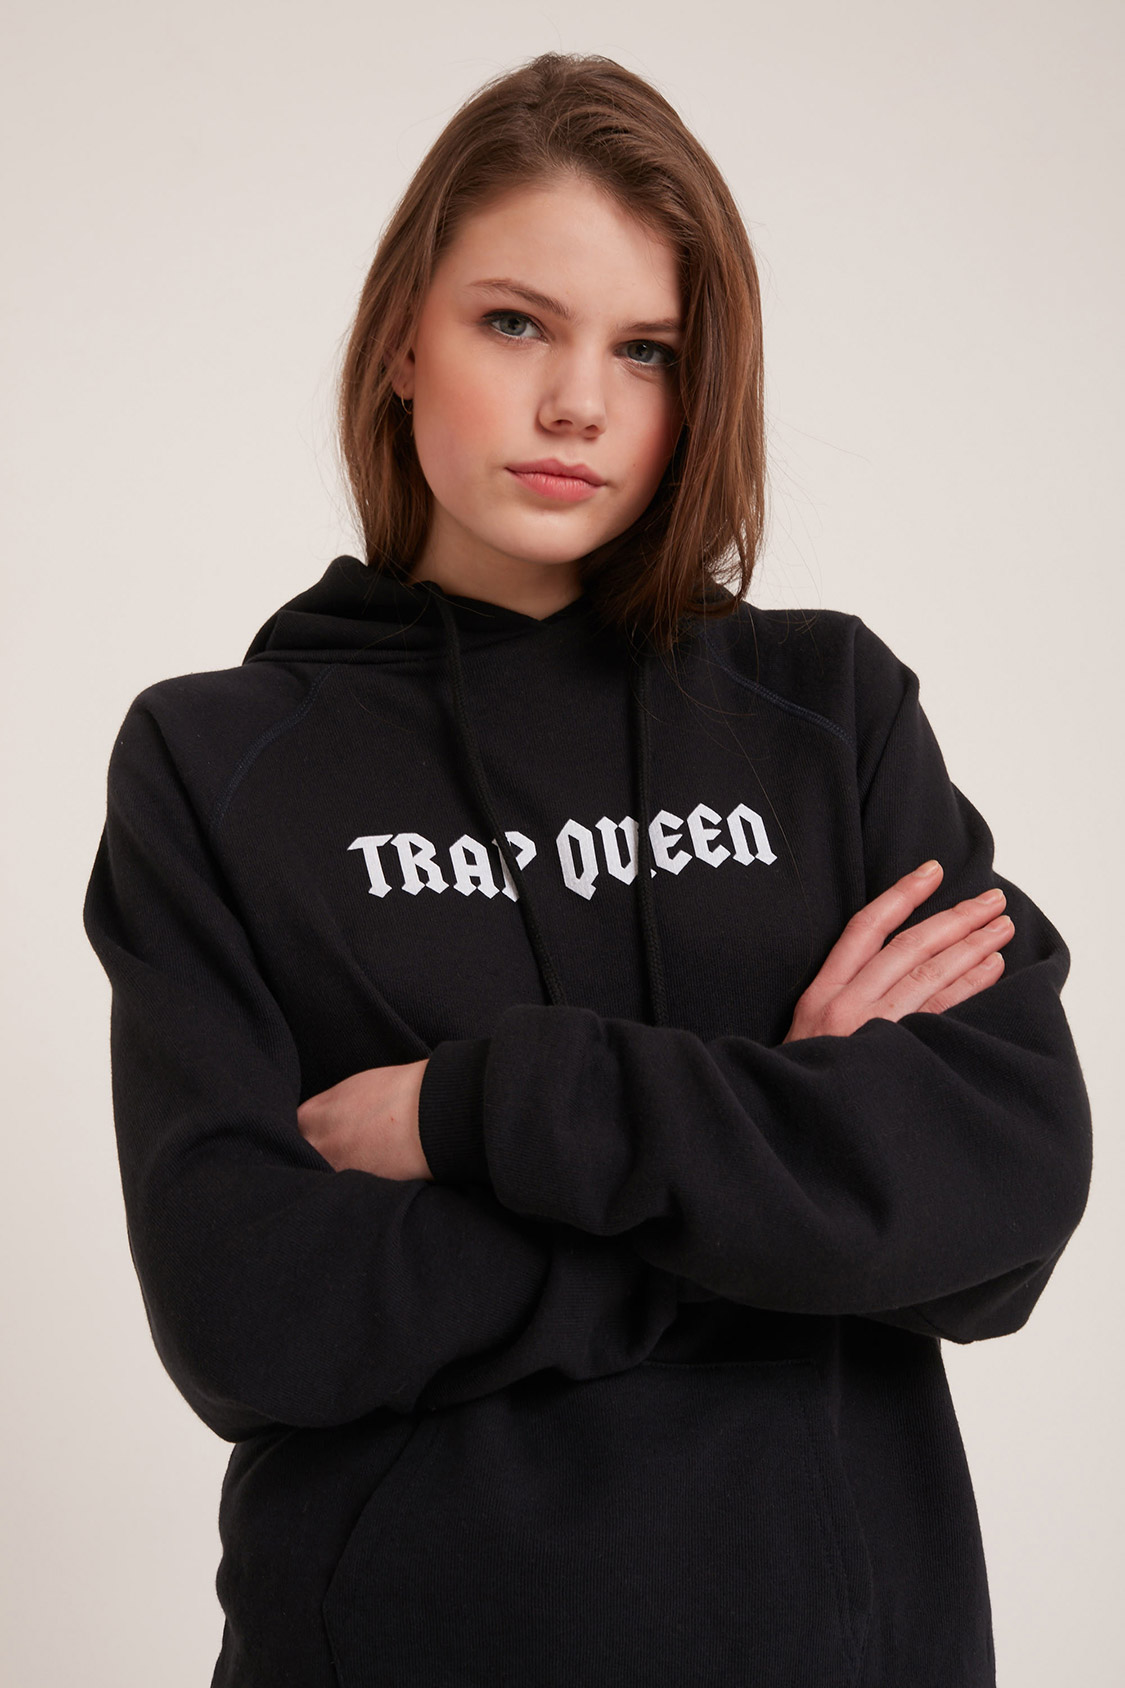 Trap queen printed hoodie